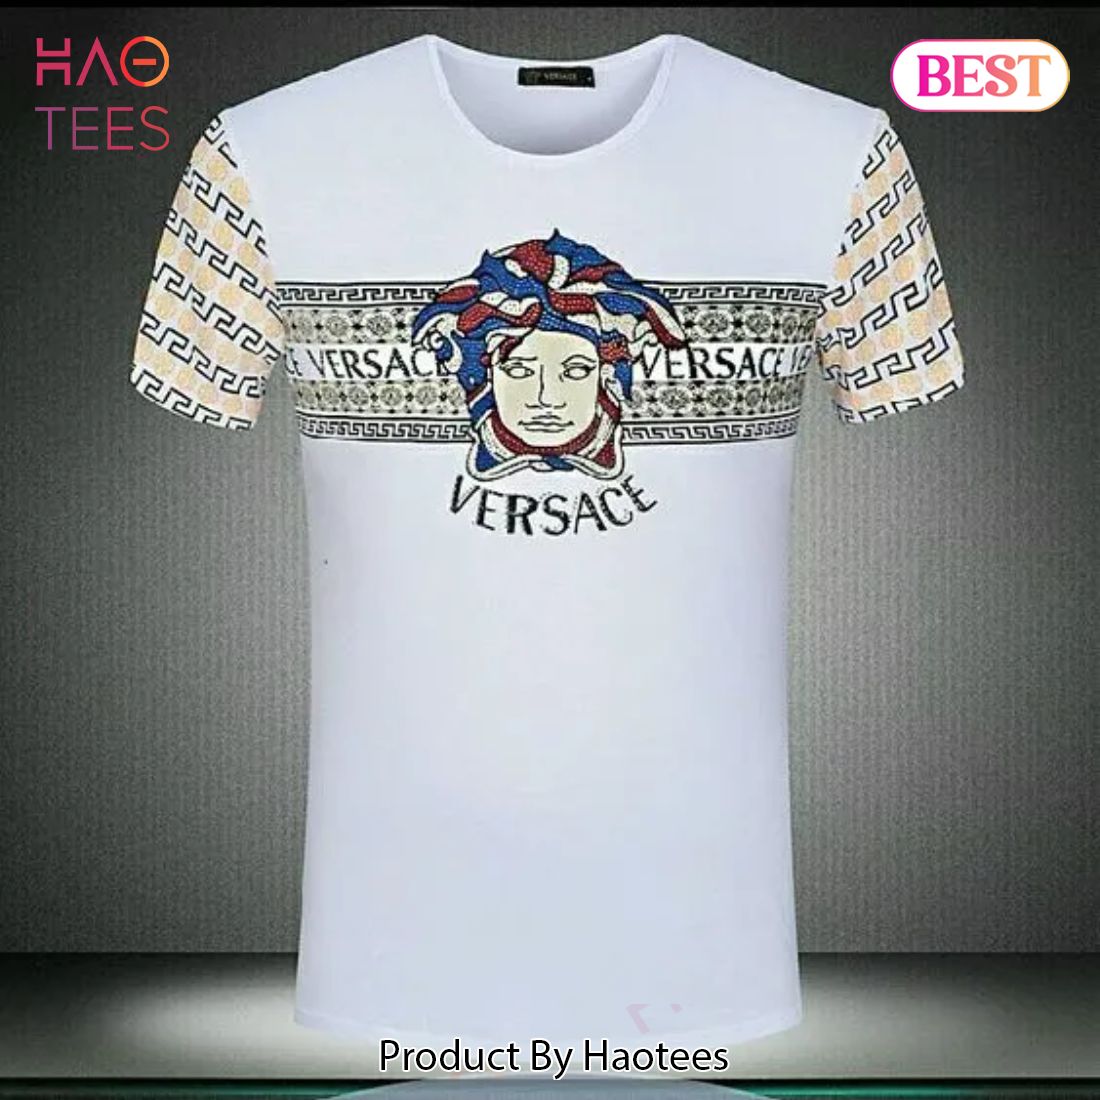 NEW FASHION] Versace Medusa Luxury Brand T-Shirt Outfit For Men Women